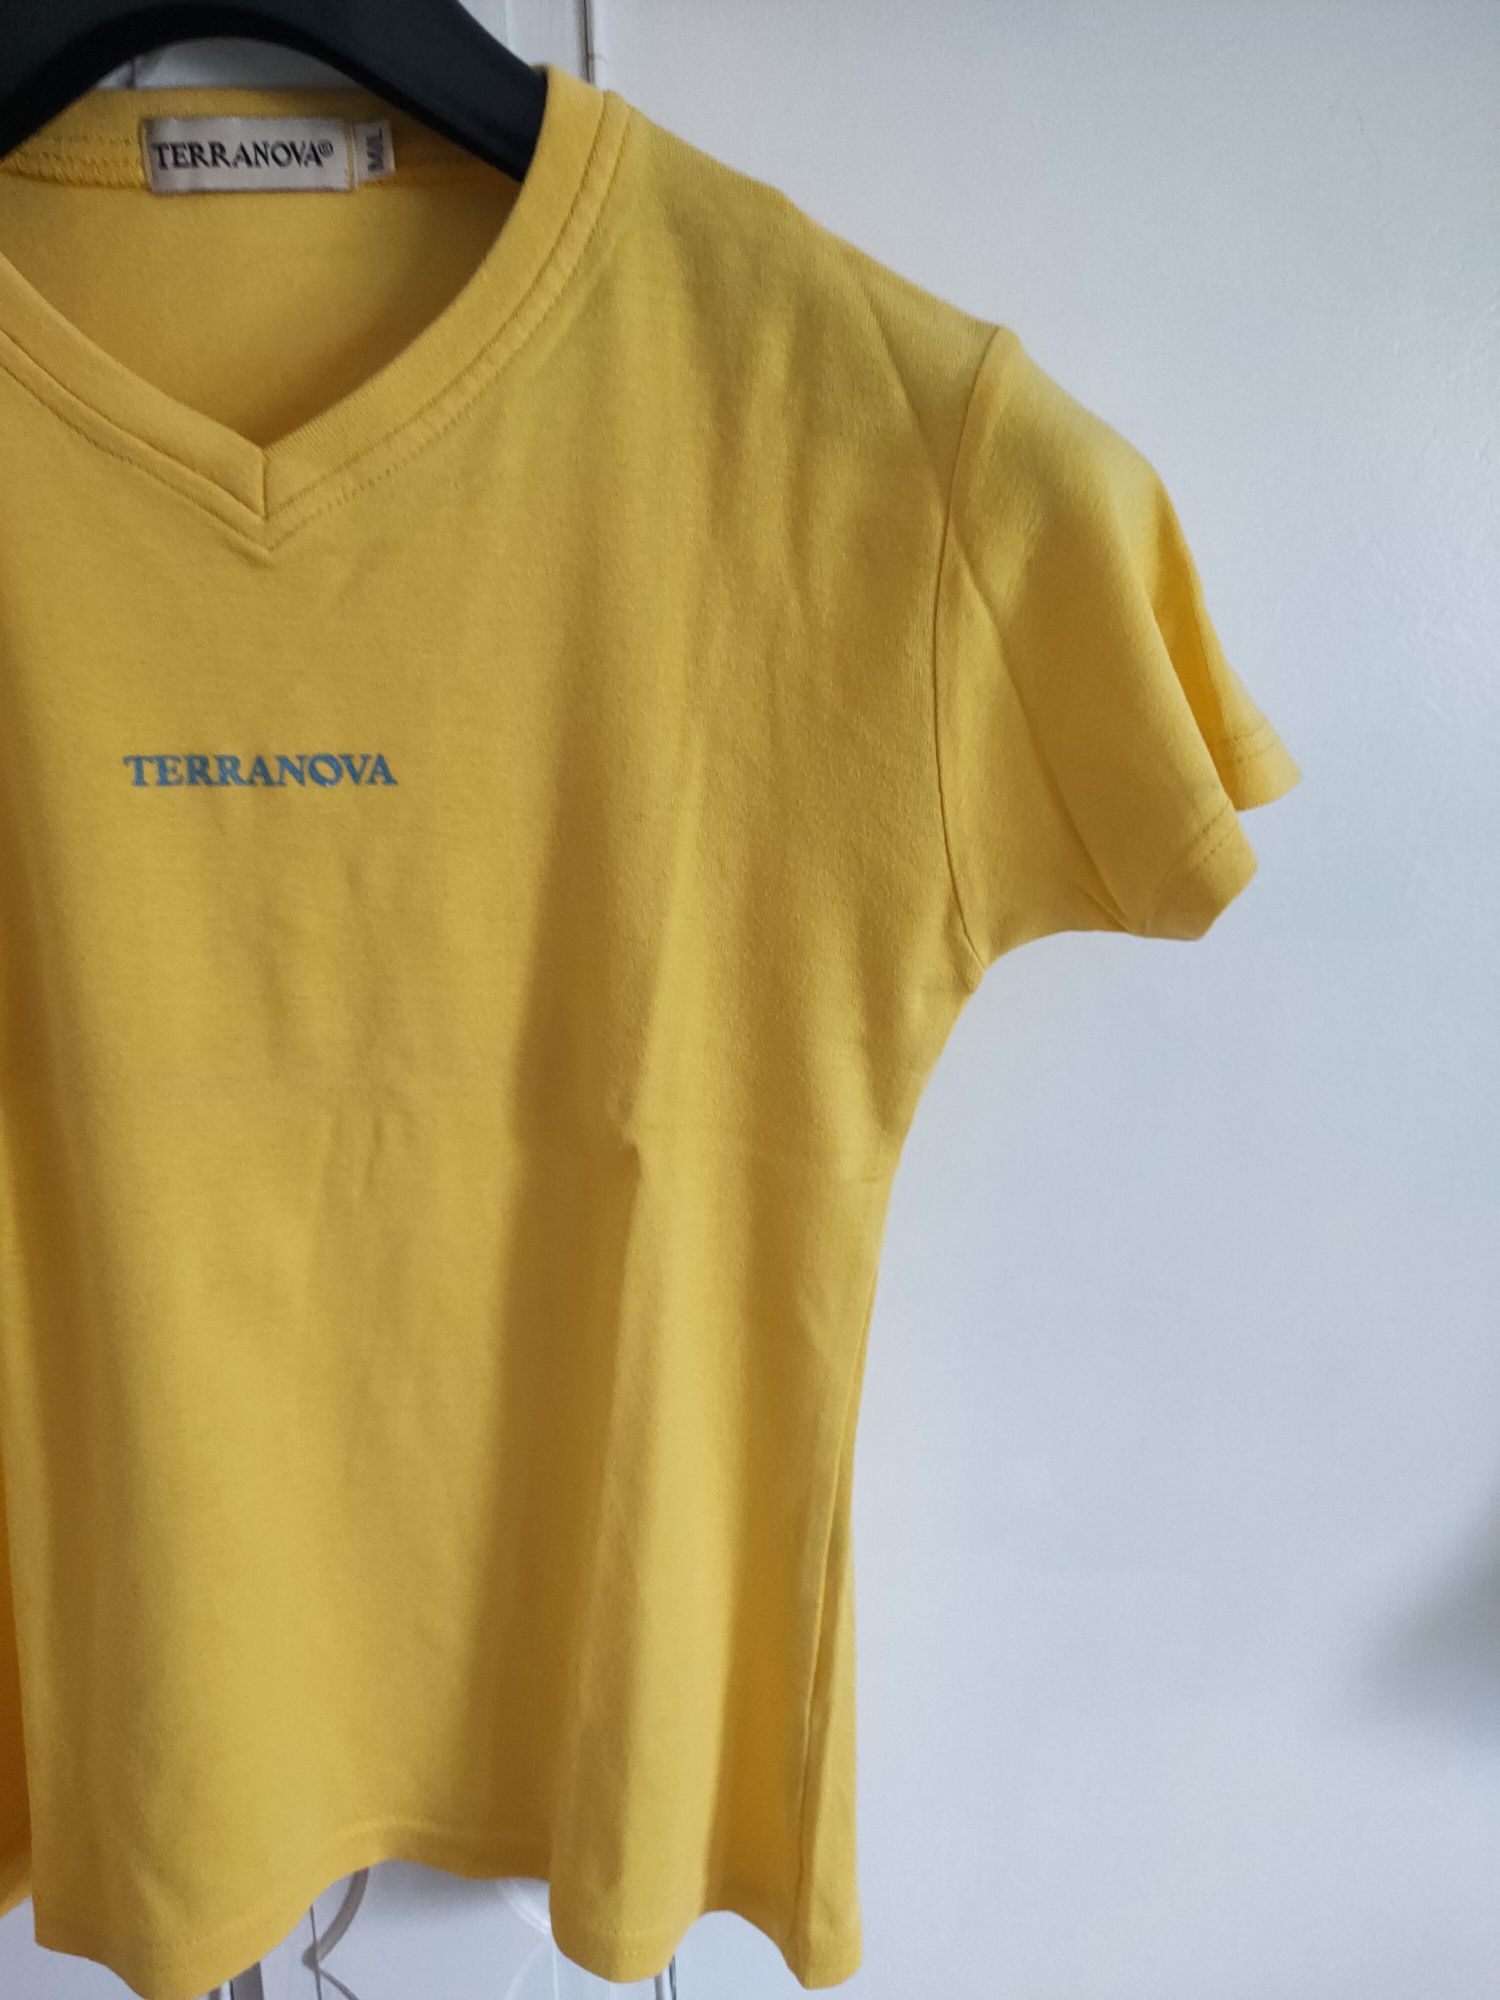 Żółta bluzka Terranova rozmiar M/L